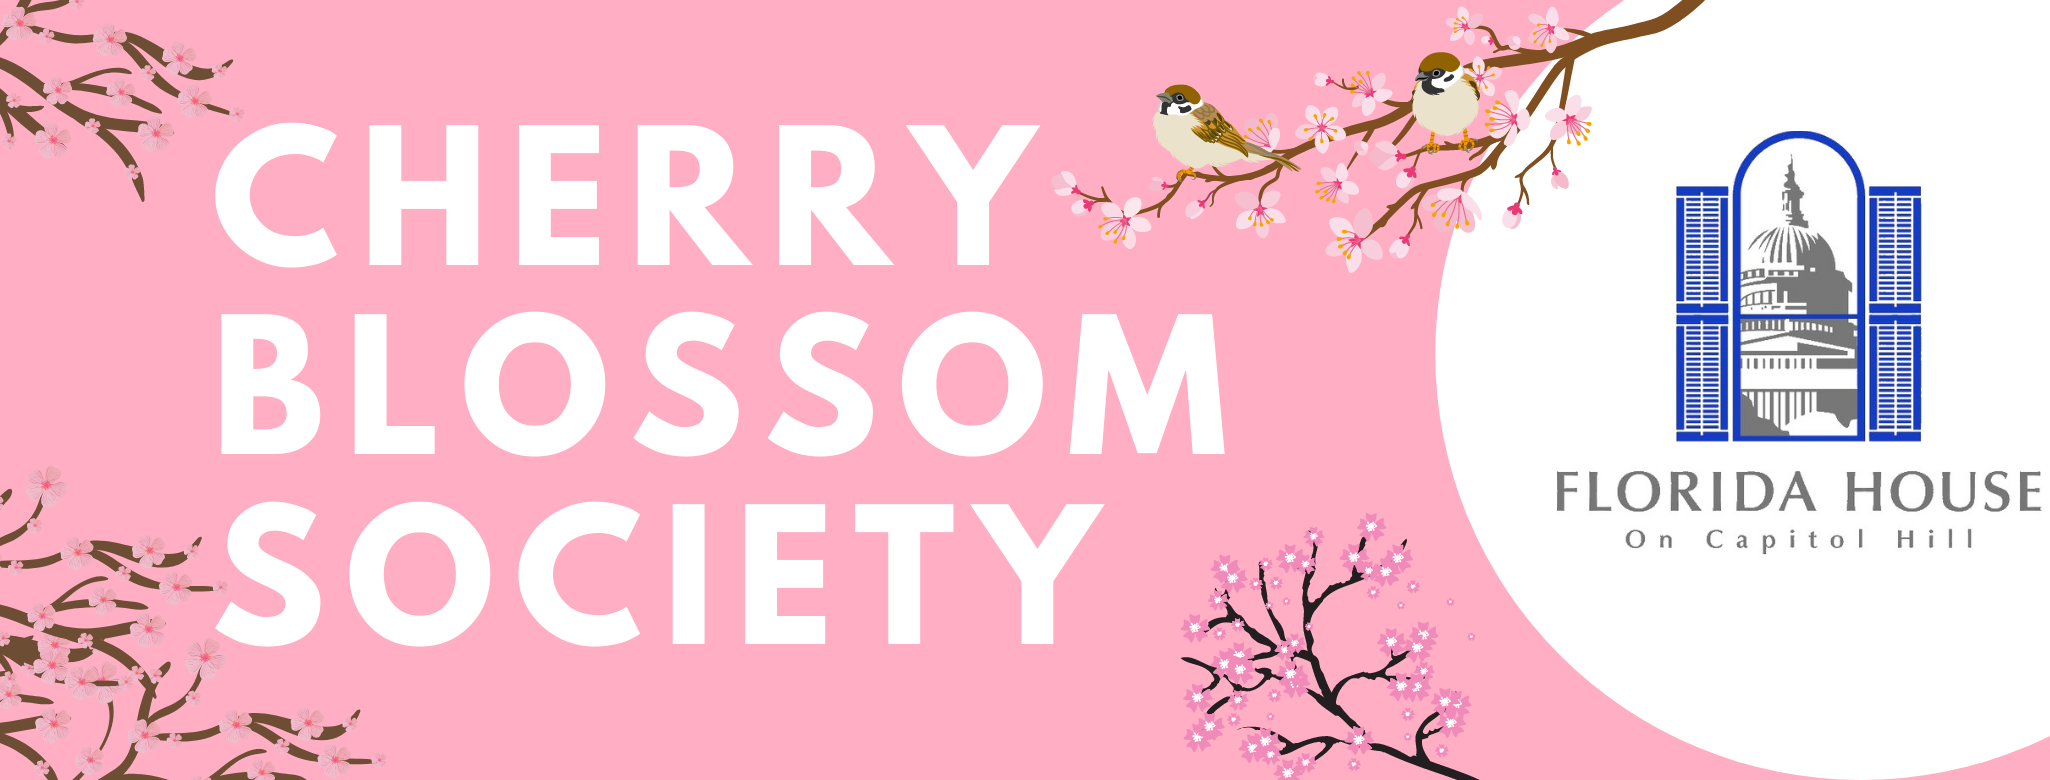 Cherry Blossom Society